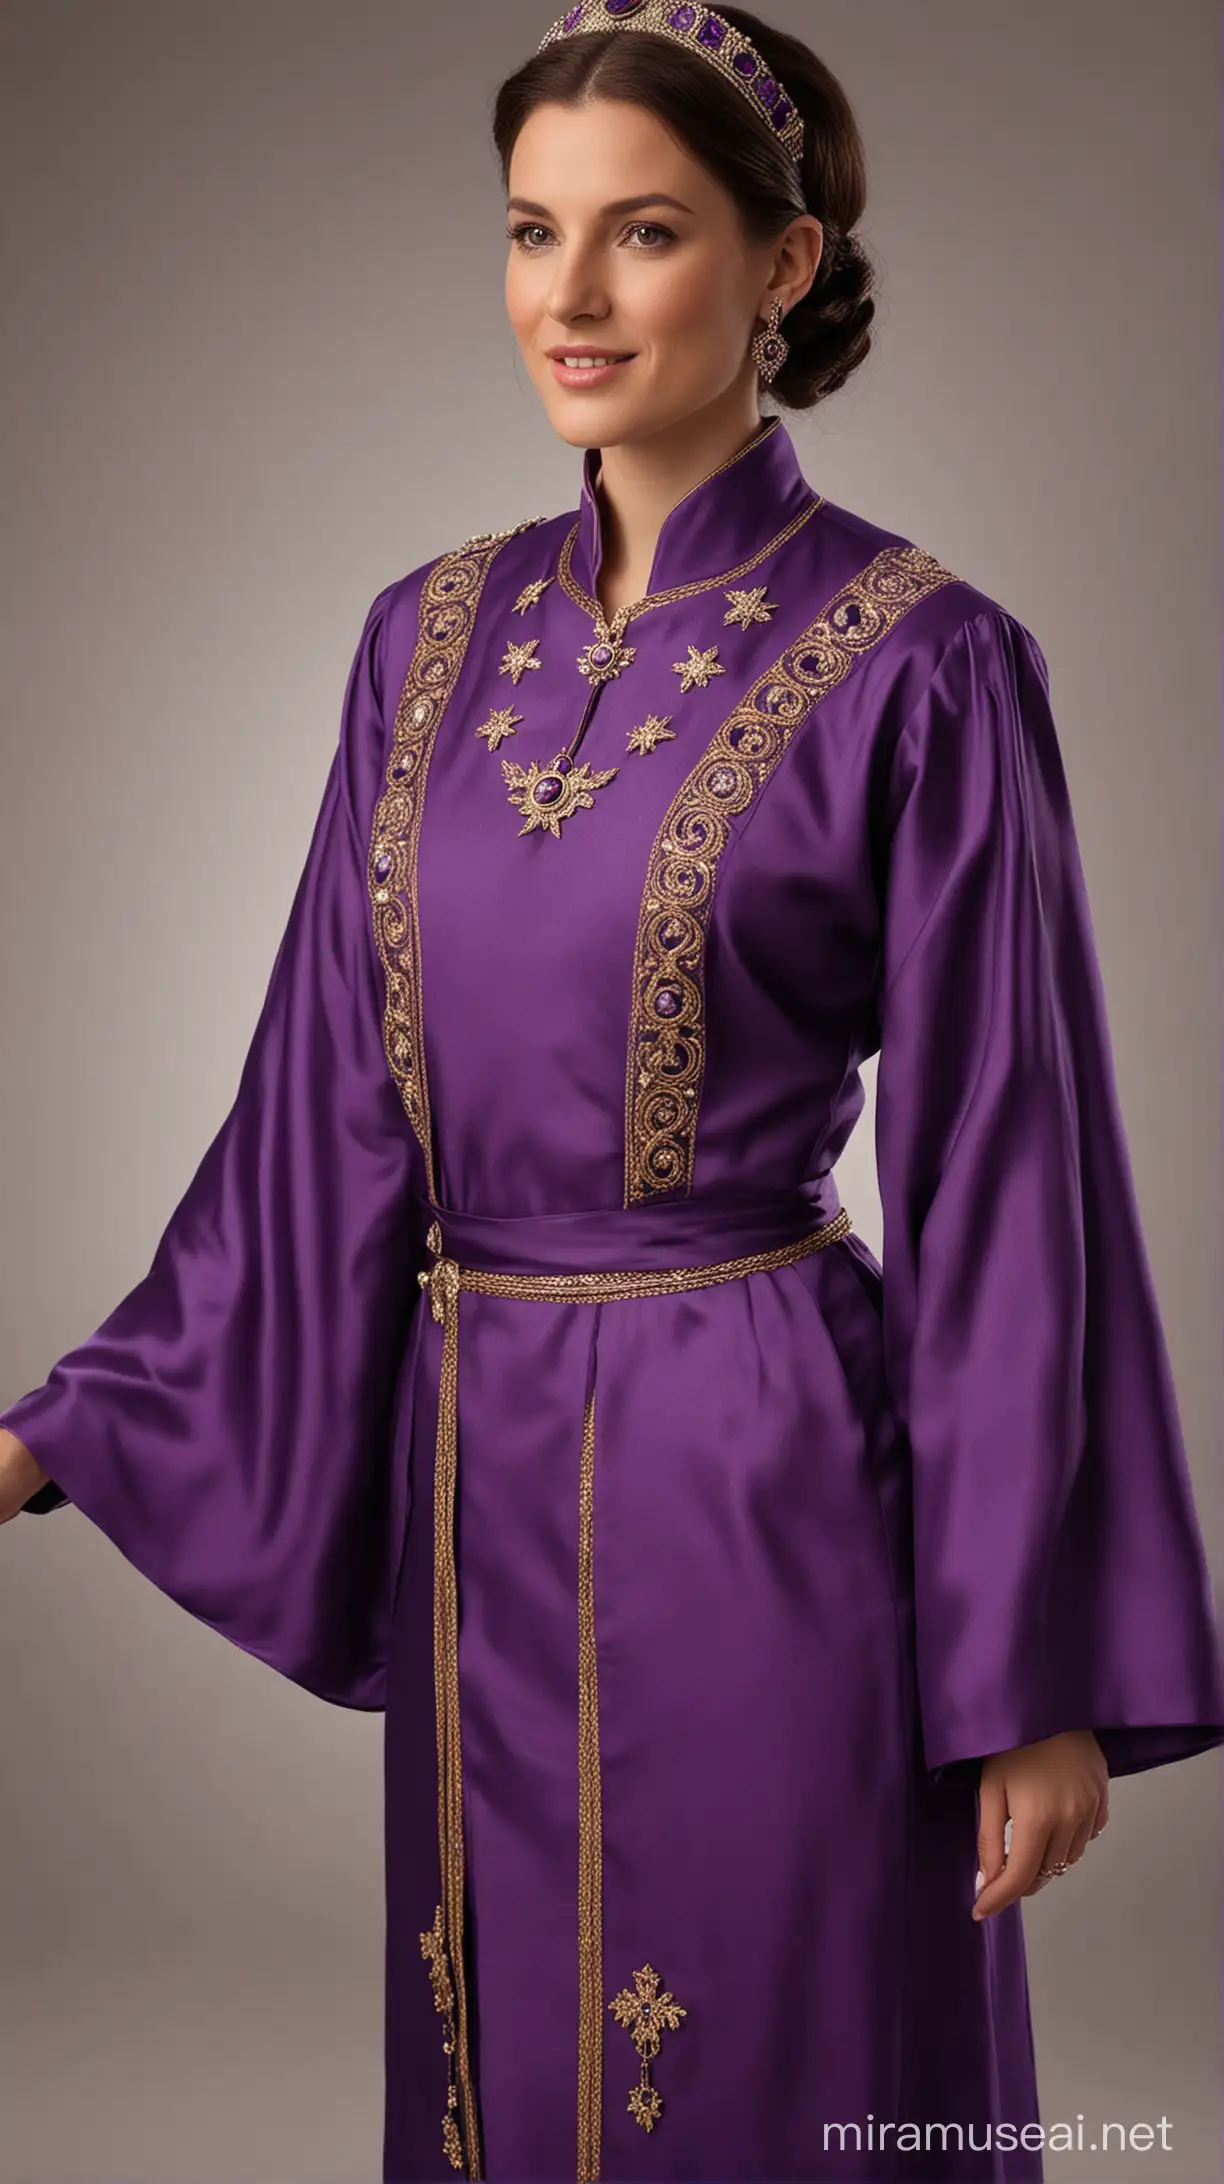 Galactic Senators Adorned in Regal Purple Robes